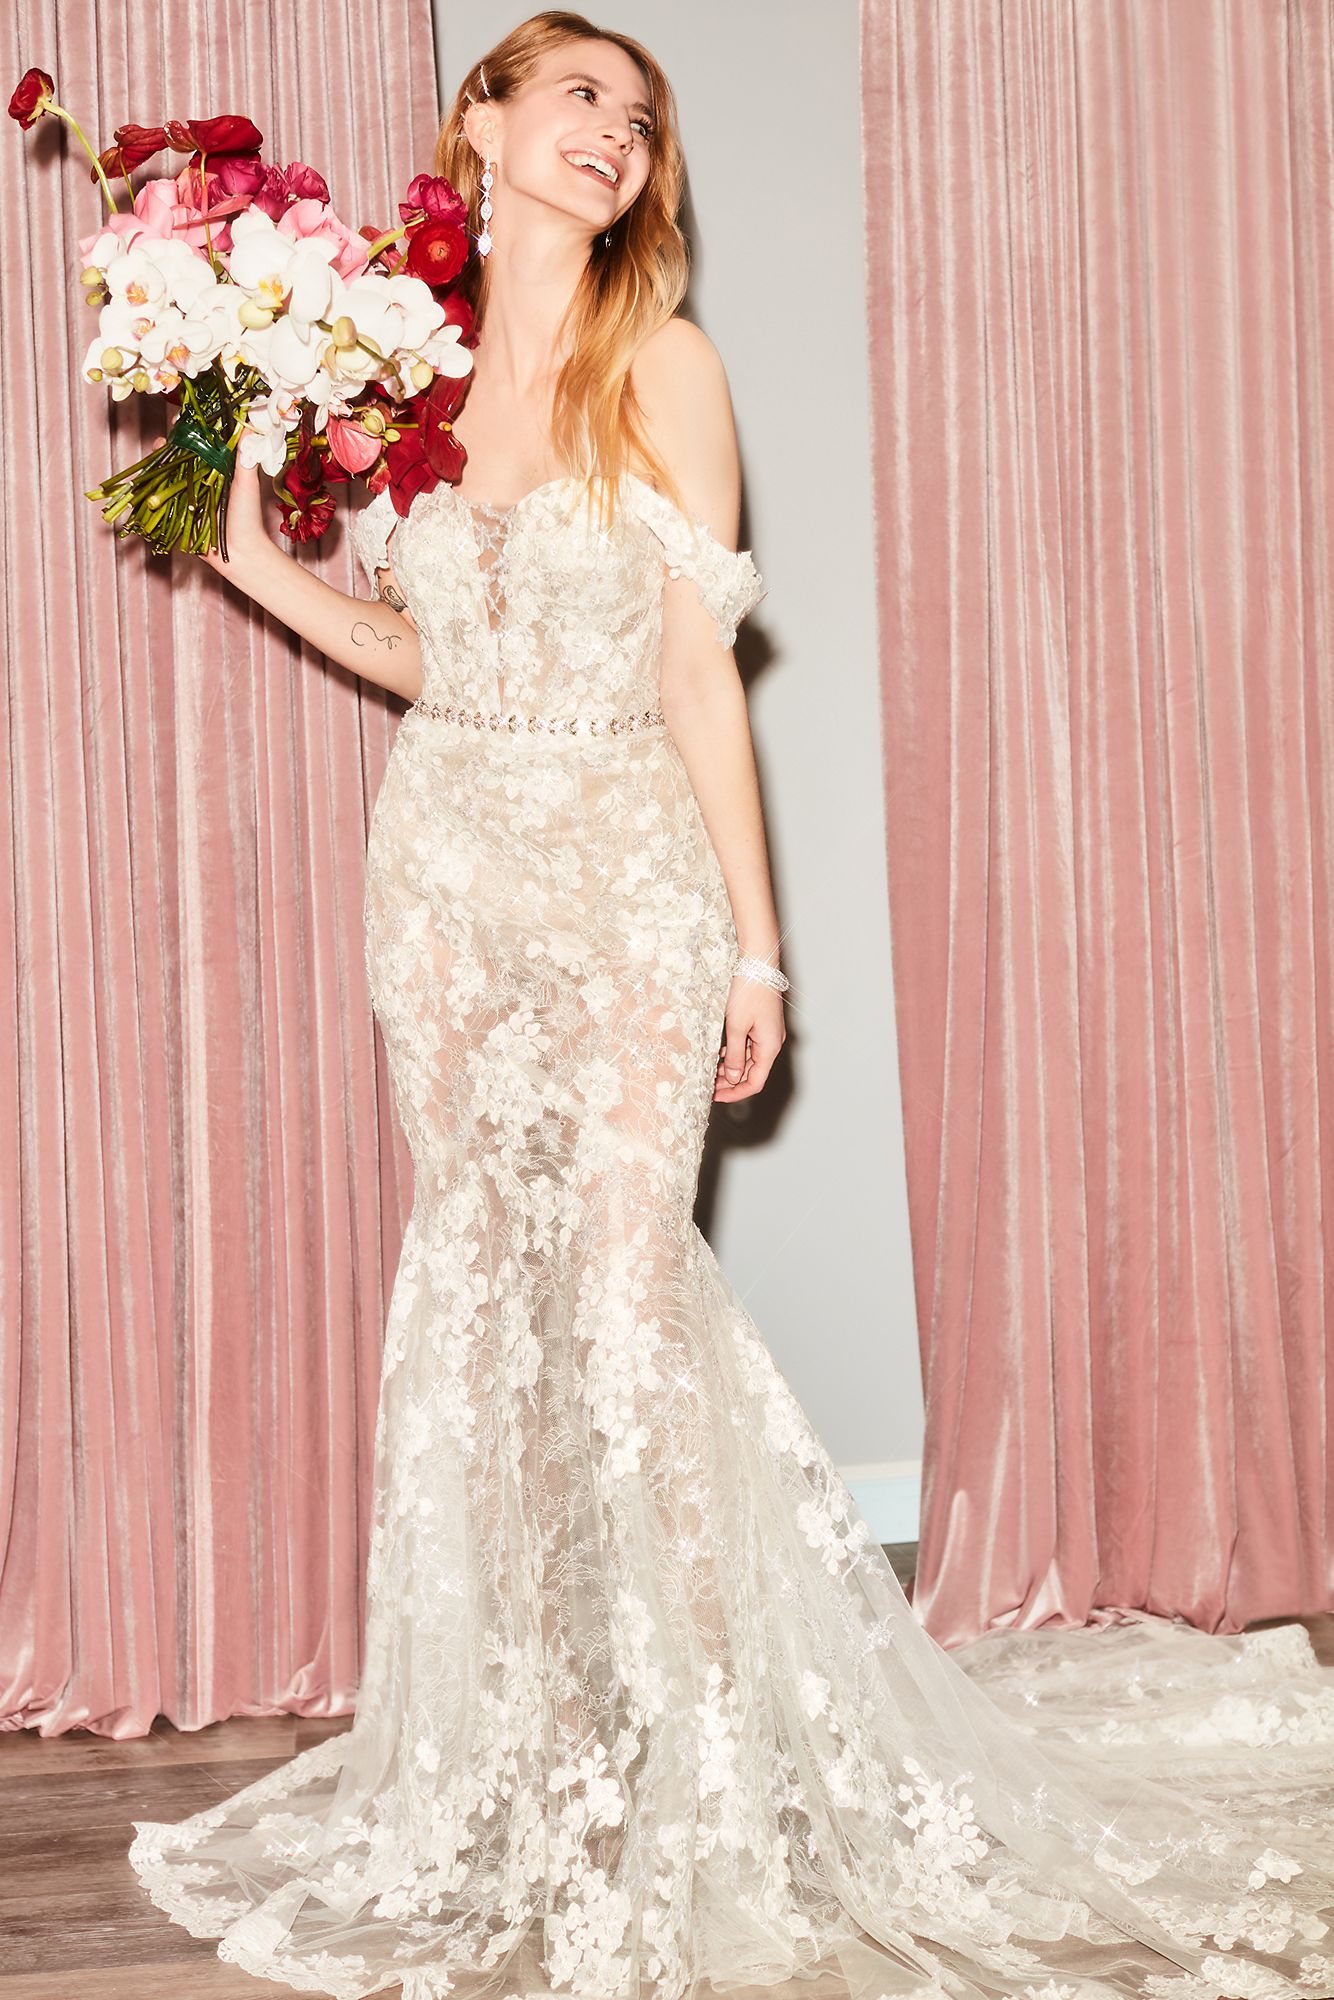 Illusion Lace Bodysuit Petite Wedding Dress Galina Signature 7MBSWG899